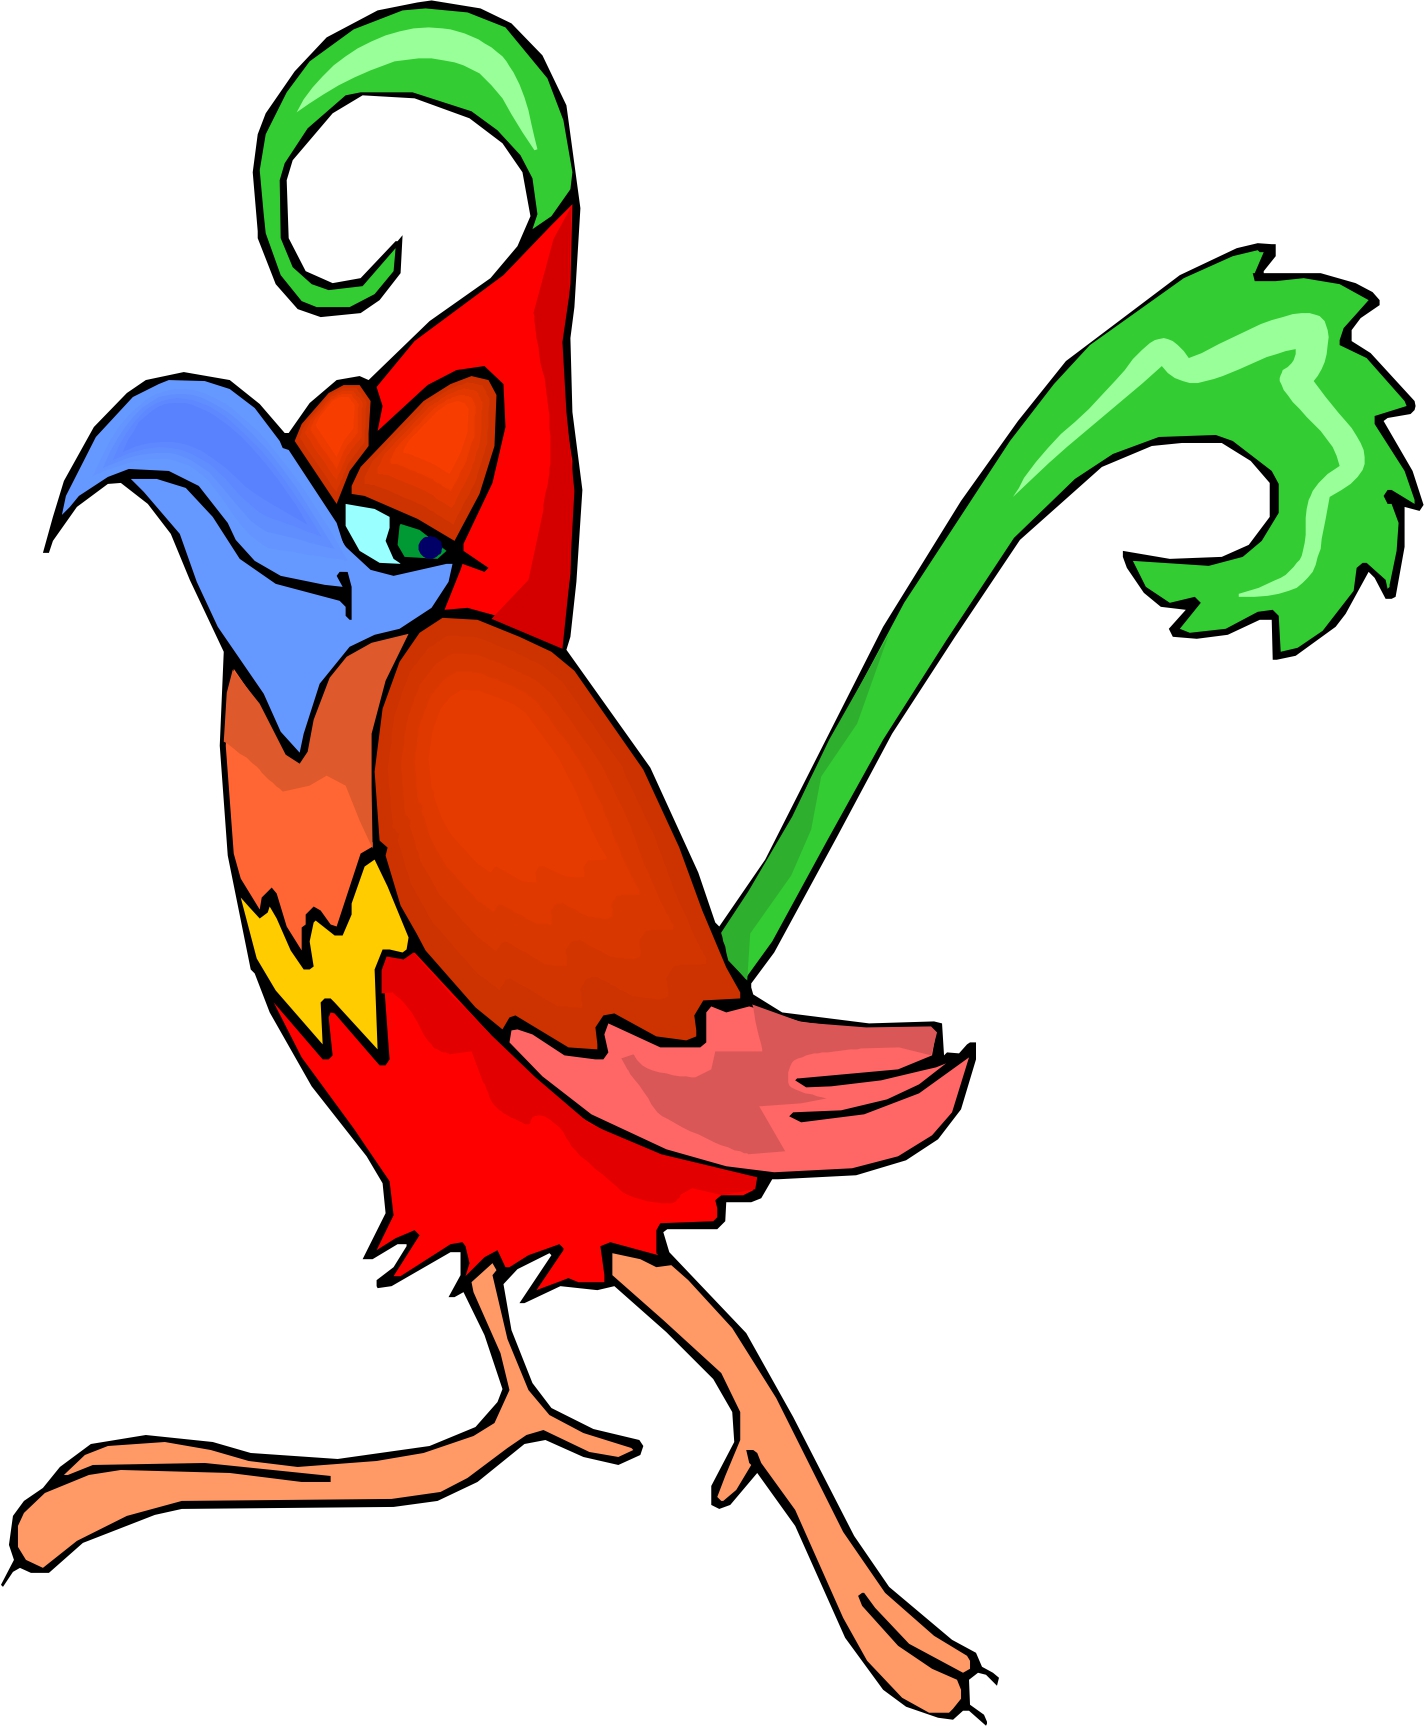 free-birds-cartoon-images-download-free-birds-cartoon-images-png